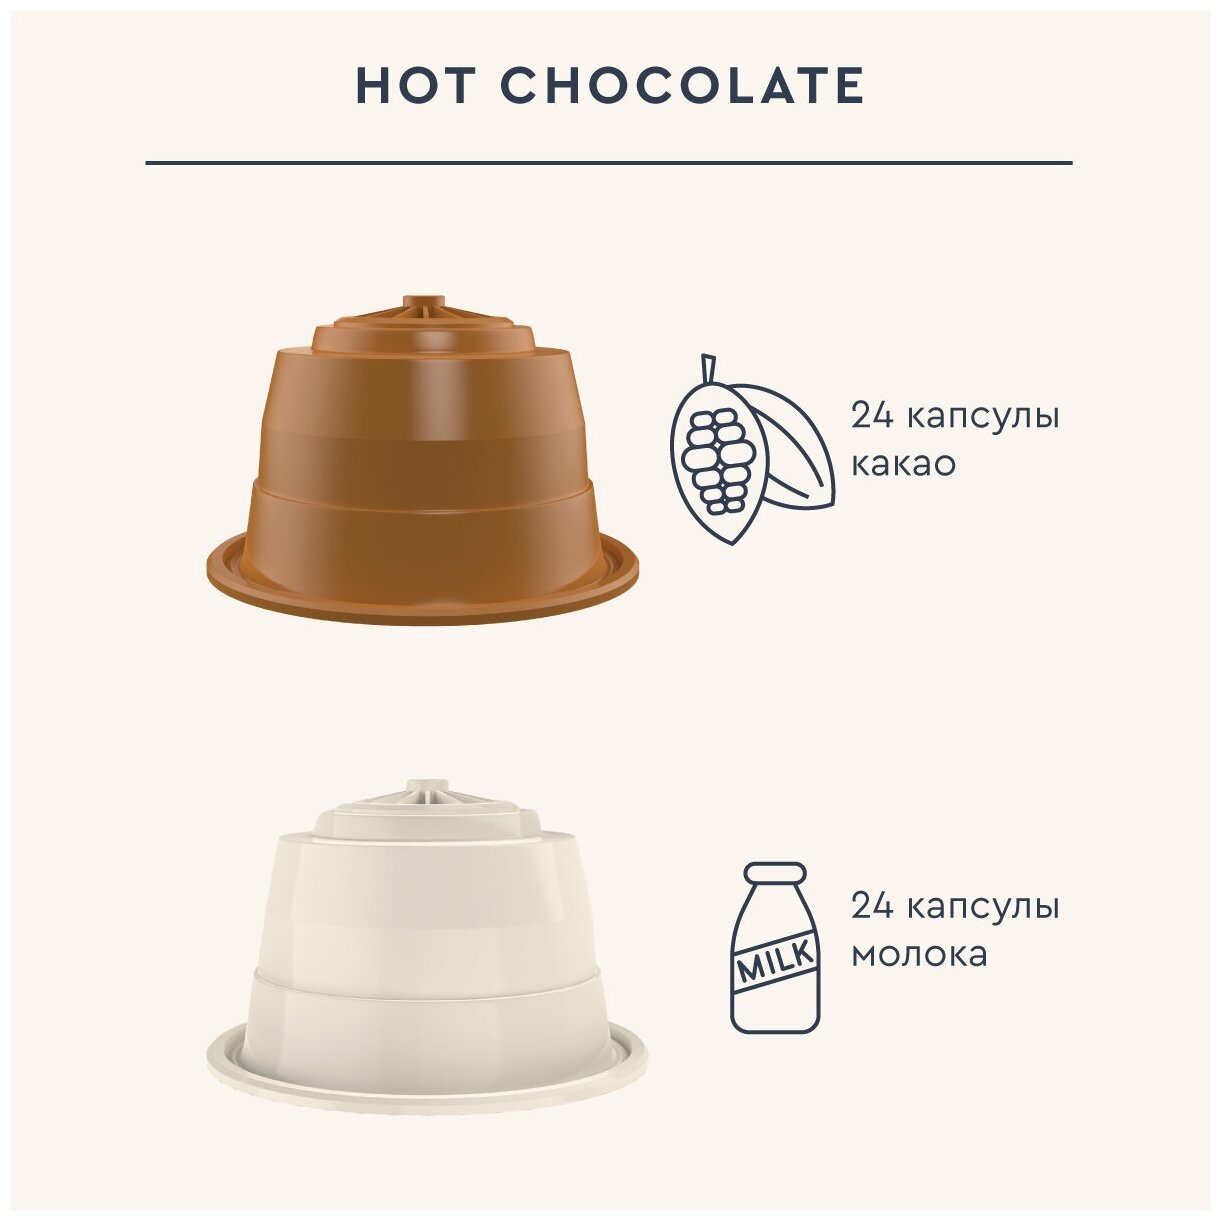 Горячий шоколад в капсулах Home Barista "Hot chocolate", формата Dolce Gusto (Дольче Густо)